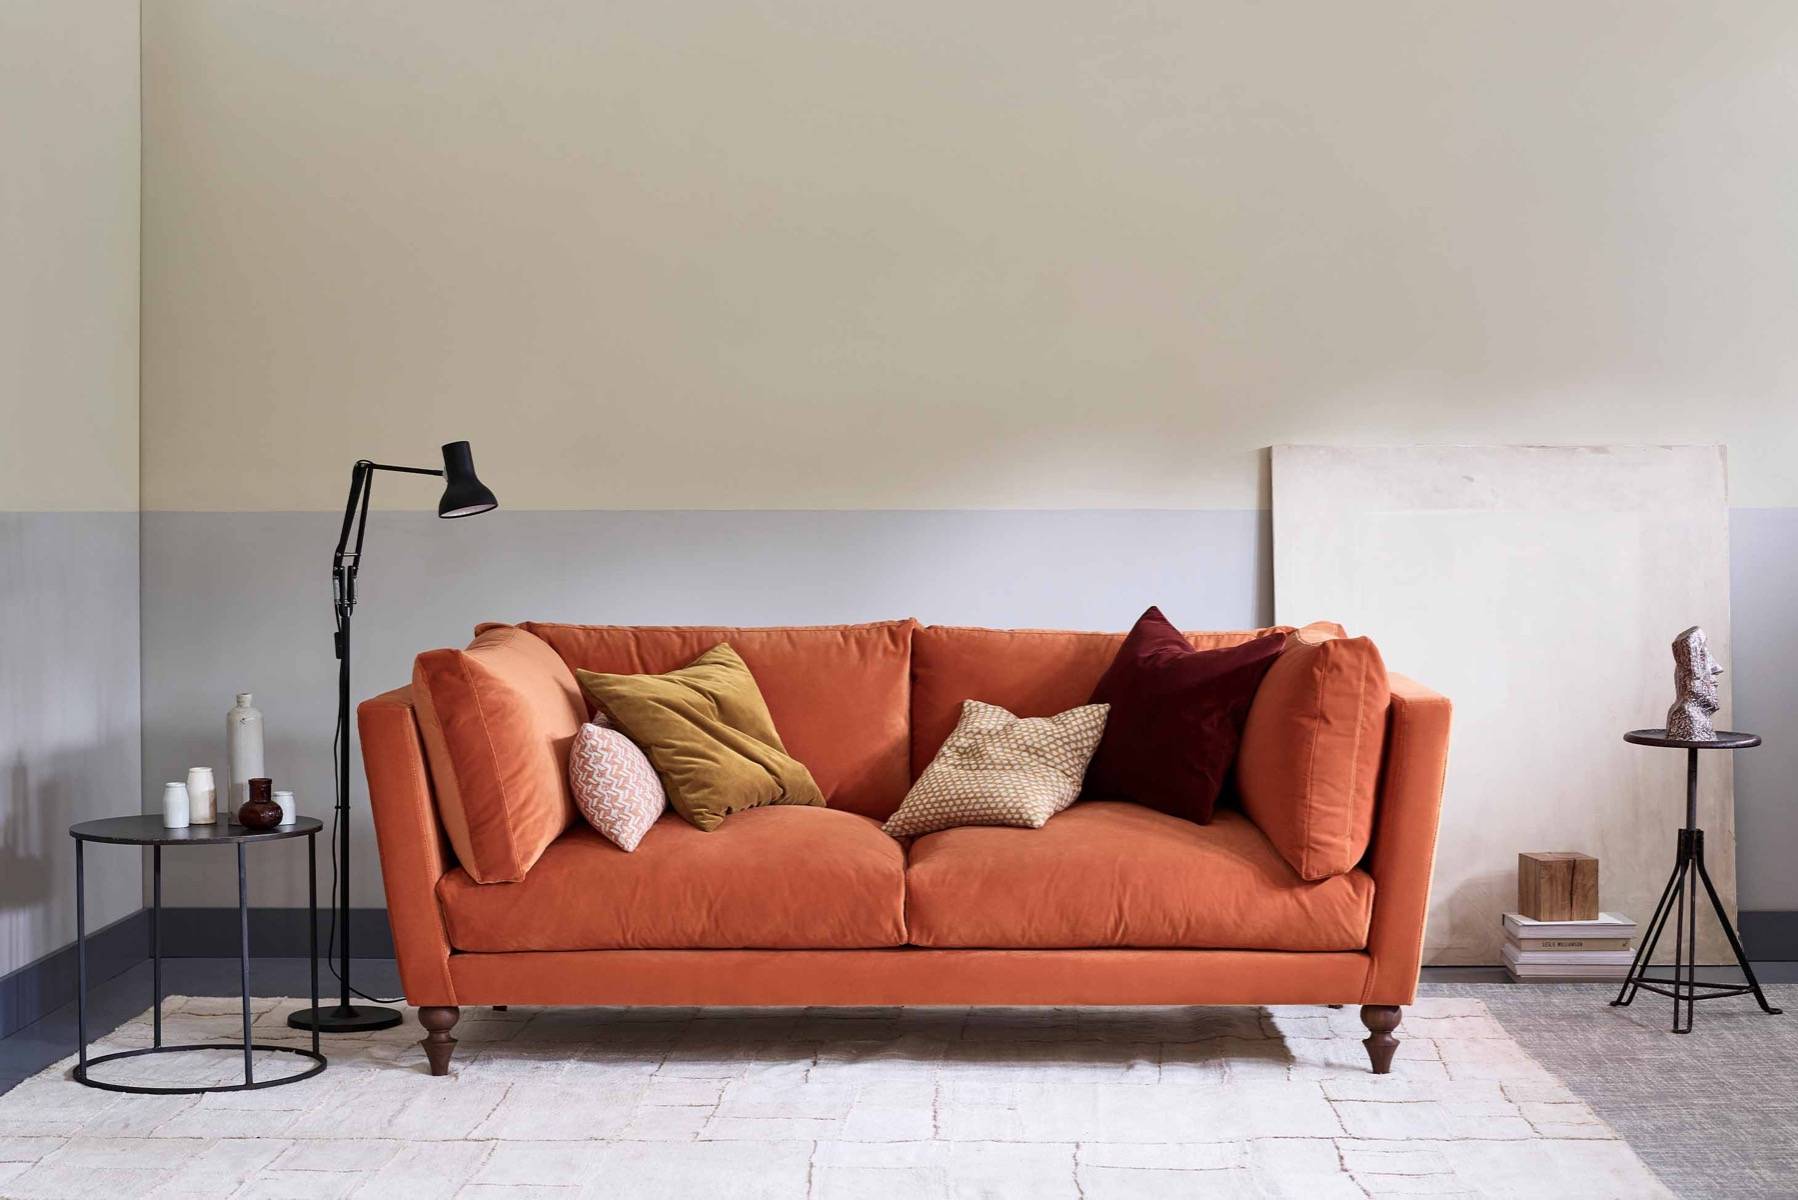 Oxido Feudal Eléctrico Angelina | Modern Sofa Settee | Love Your Home